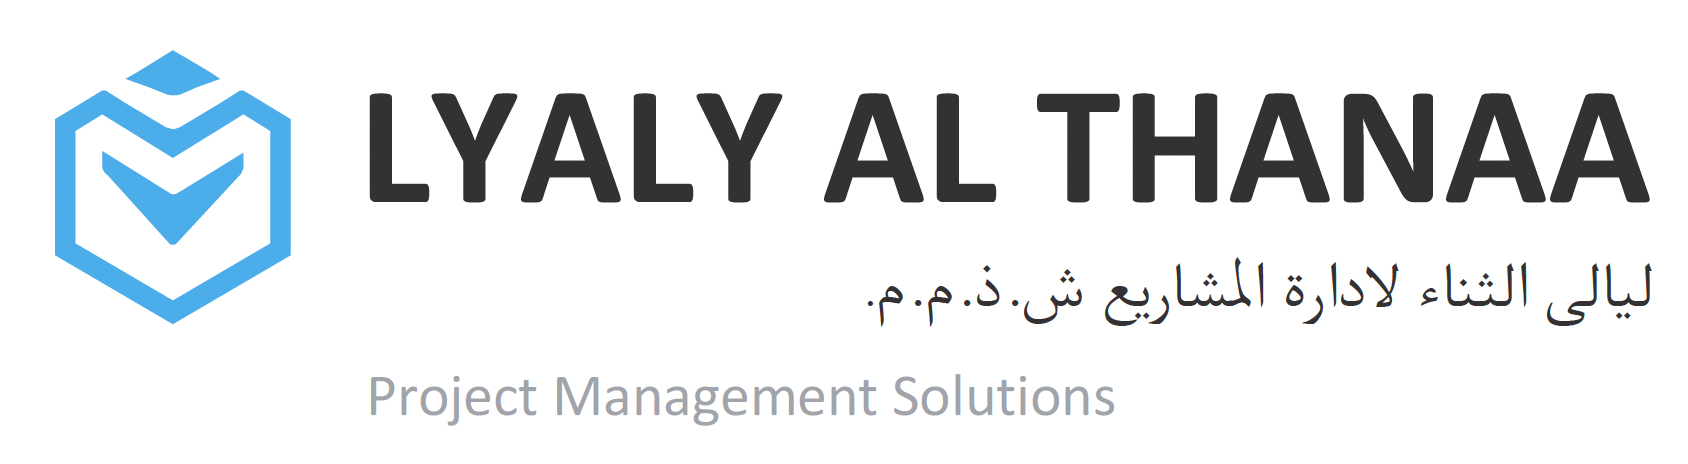 LYALY AL THANAA PROJECT MANAGEMENT L.L.C Logo